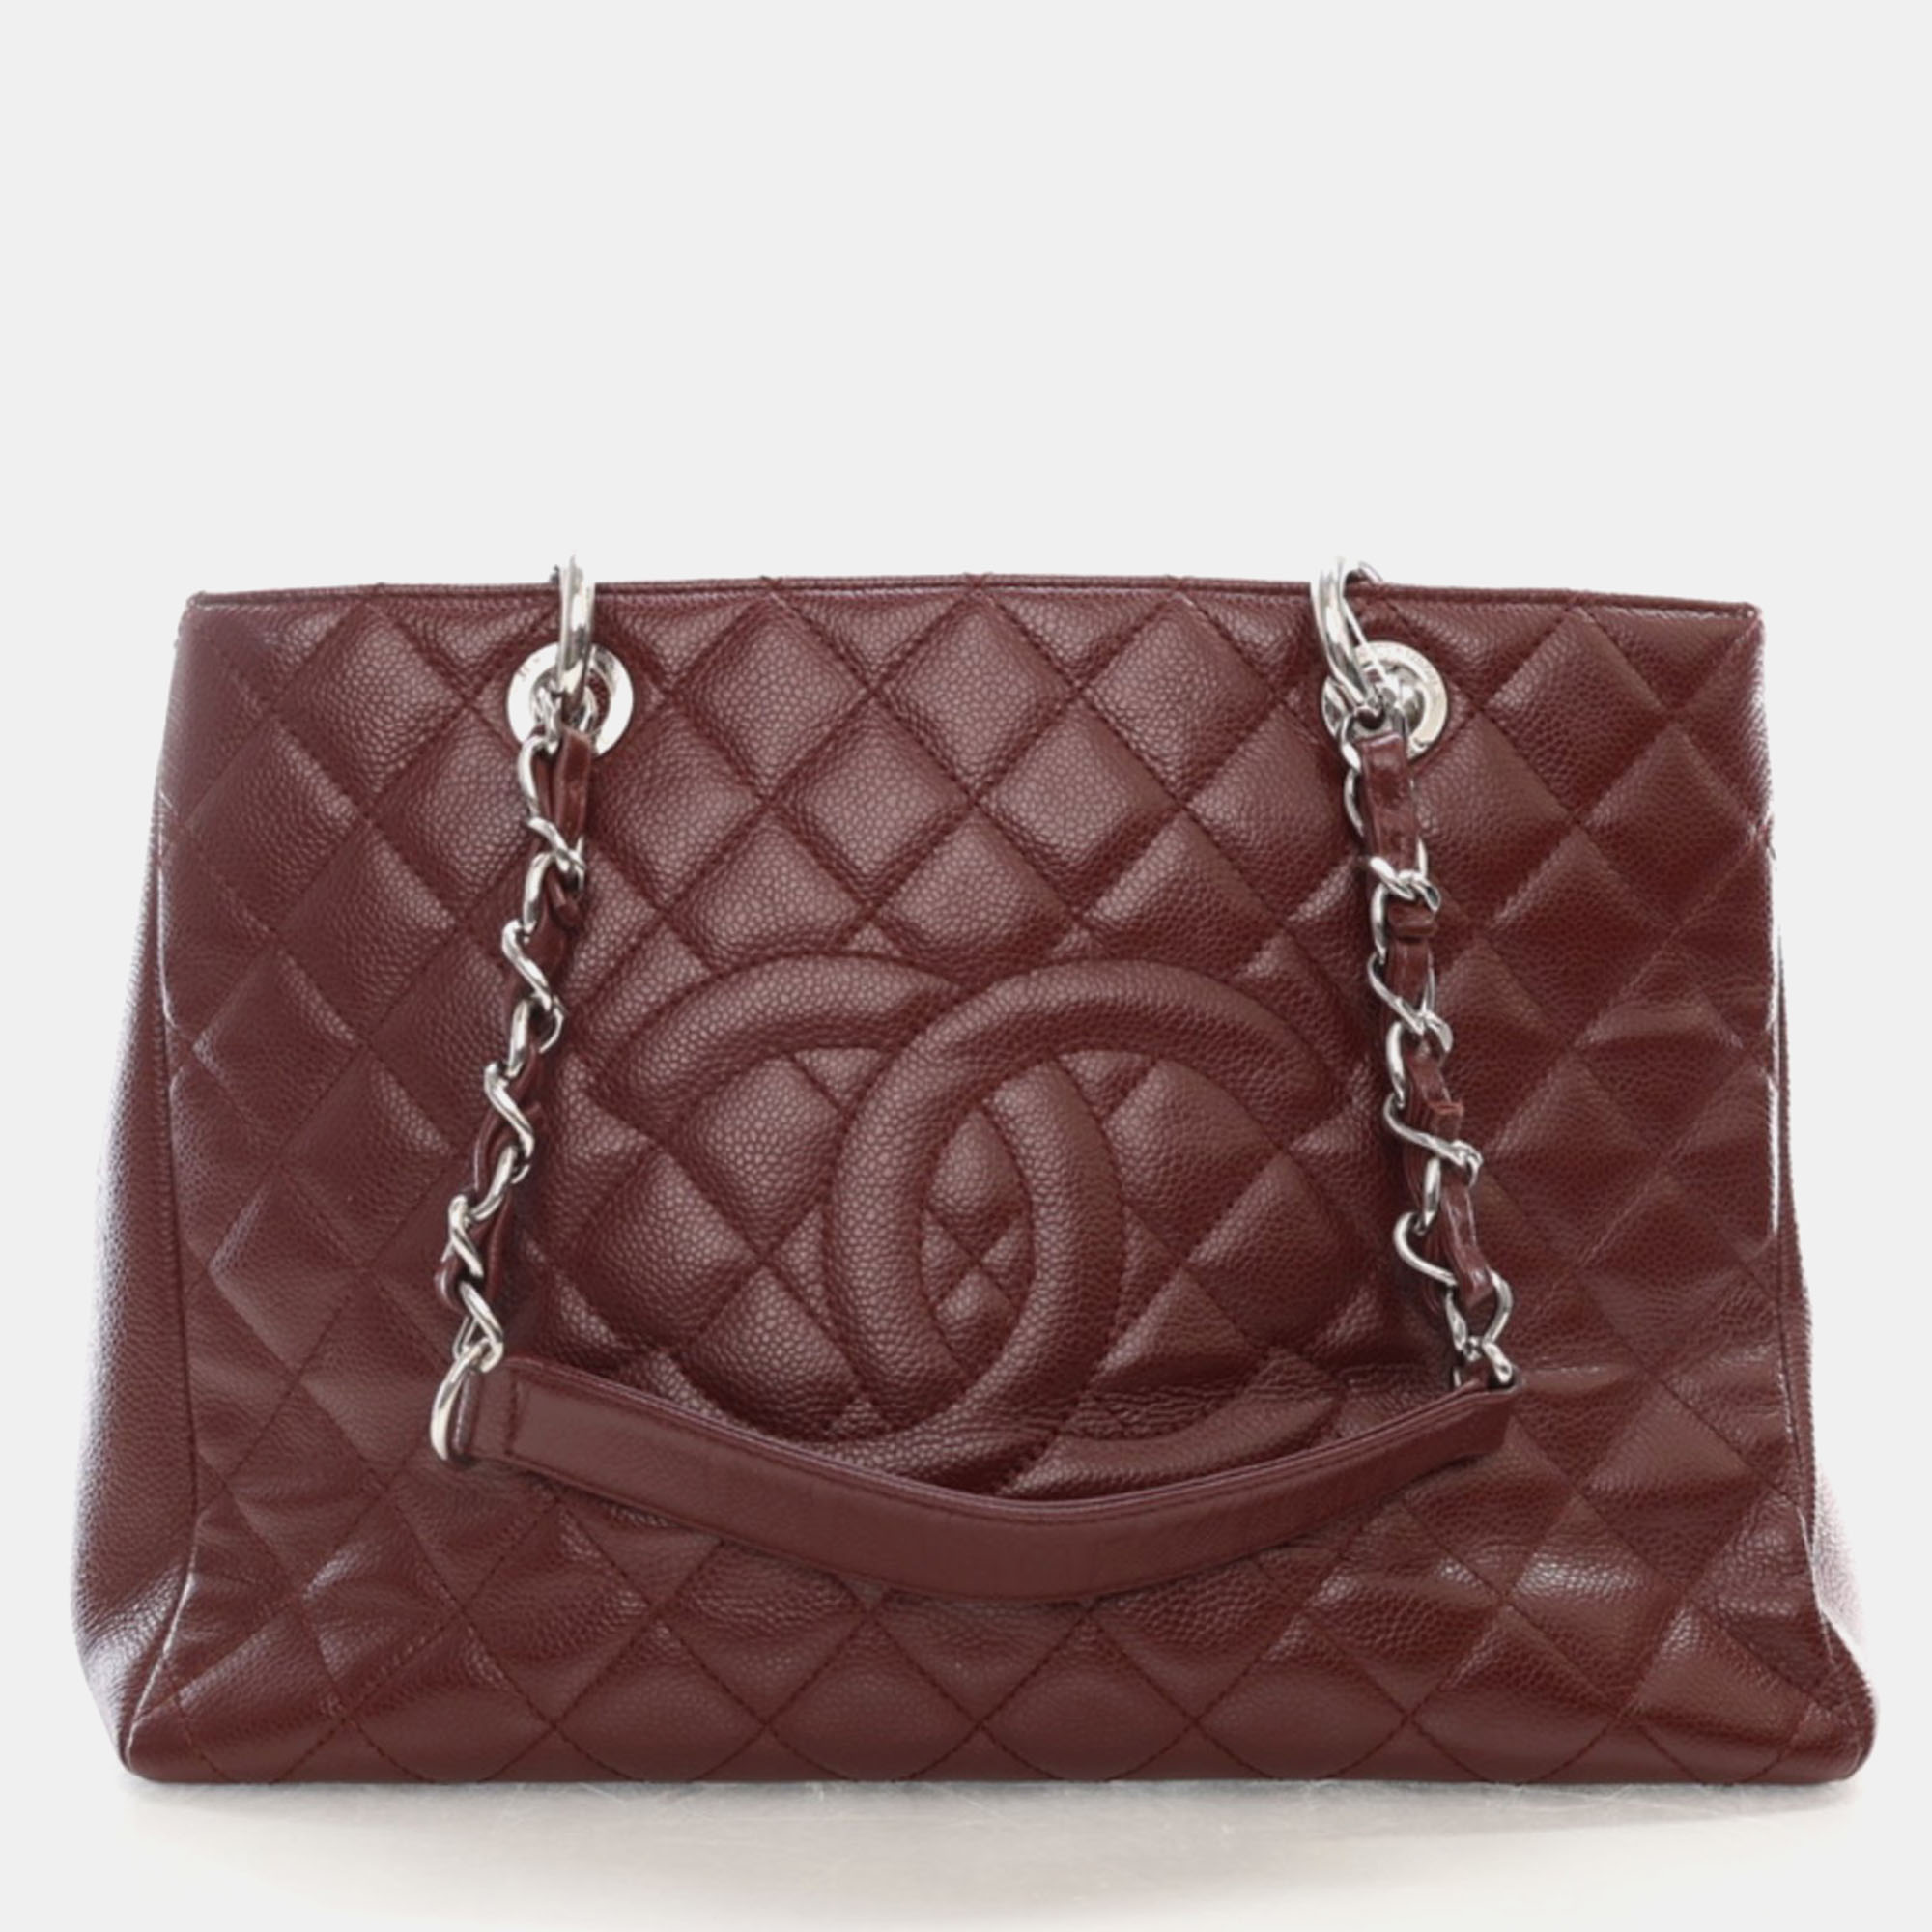 Chanel burgundy caviar leather  gst tote bag